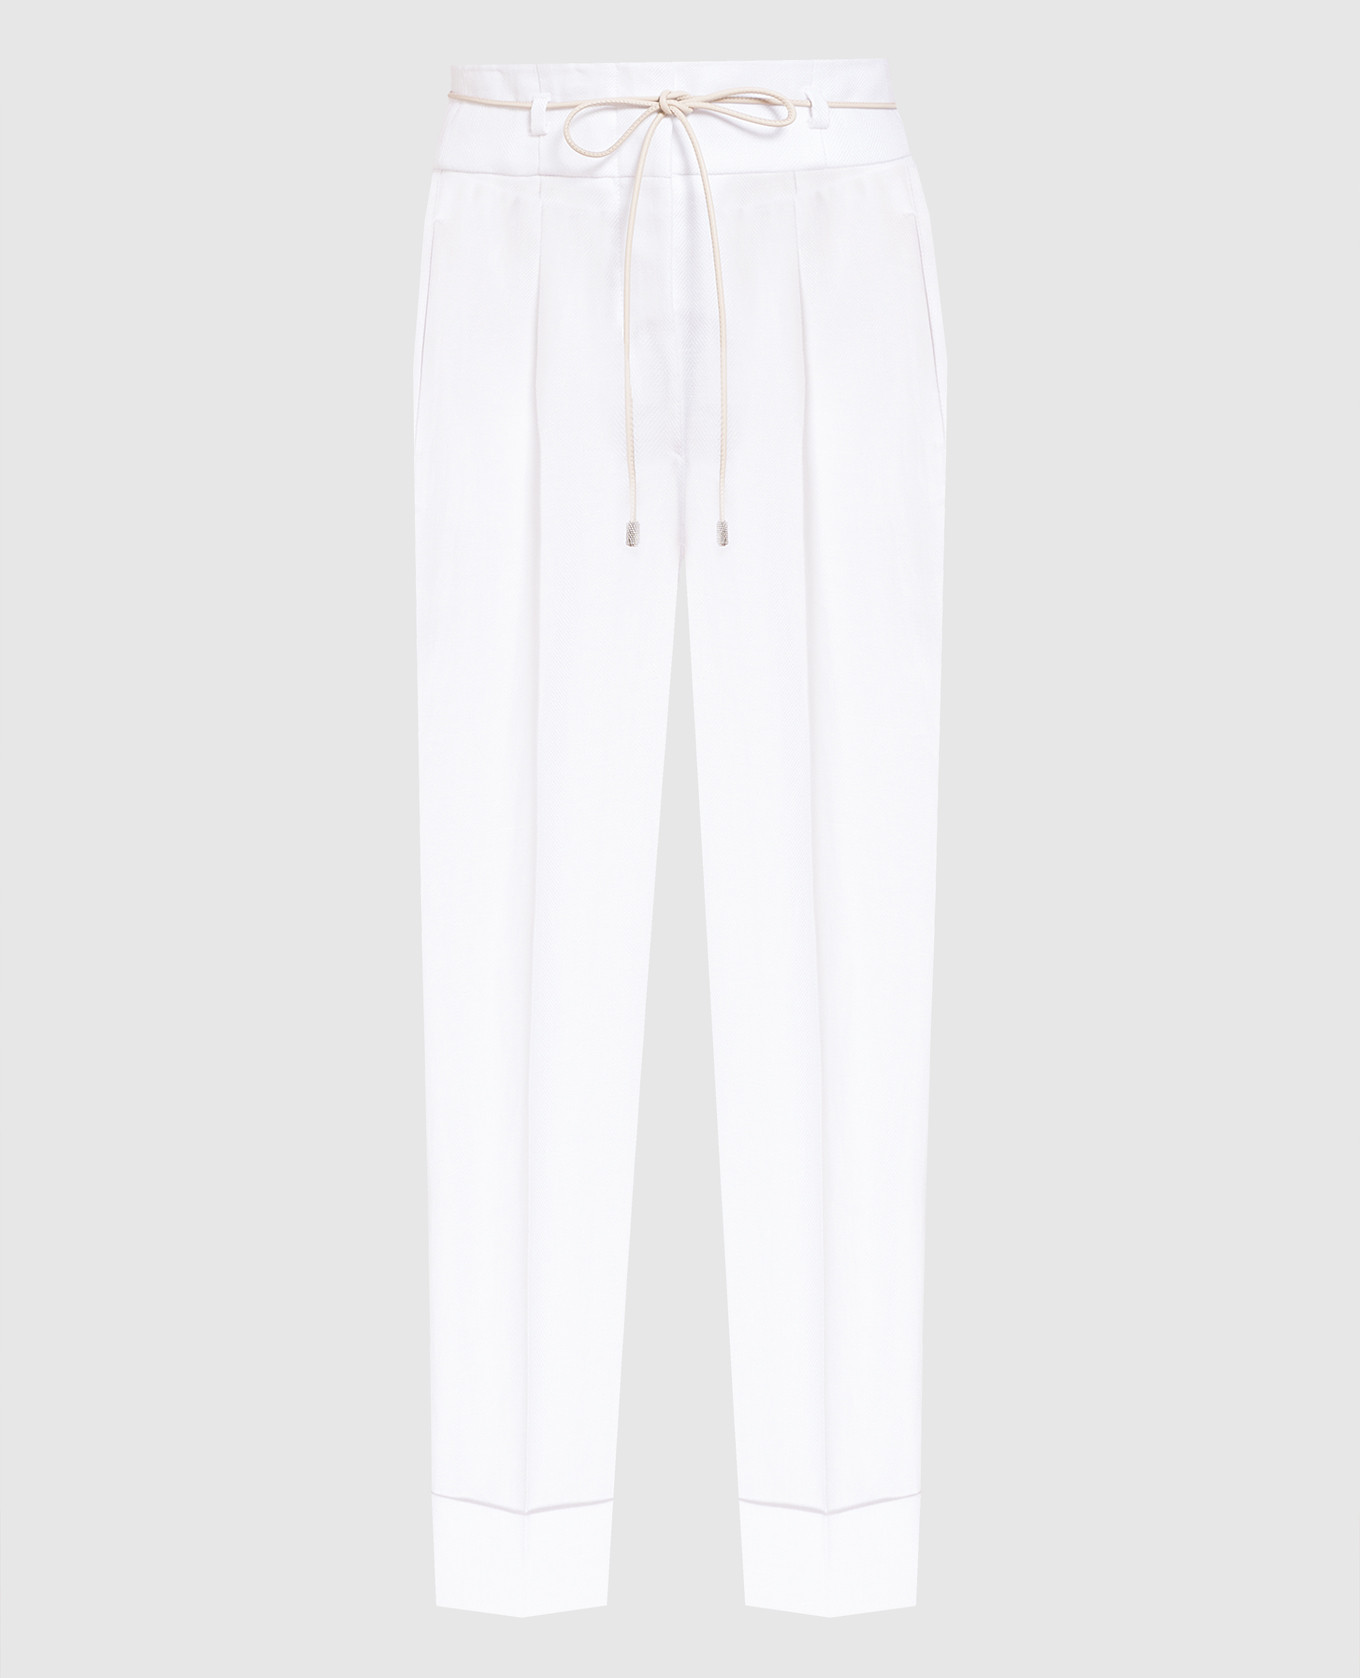 White linen pants